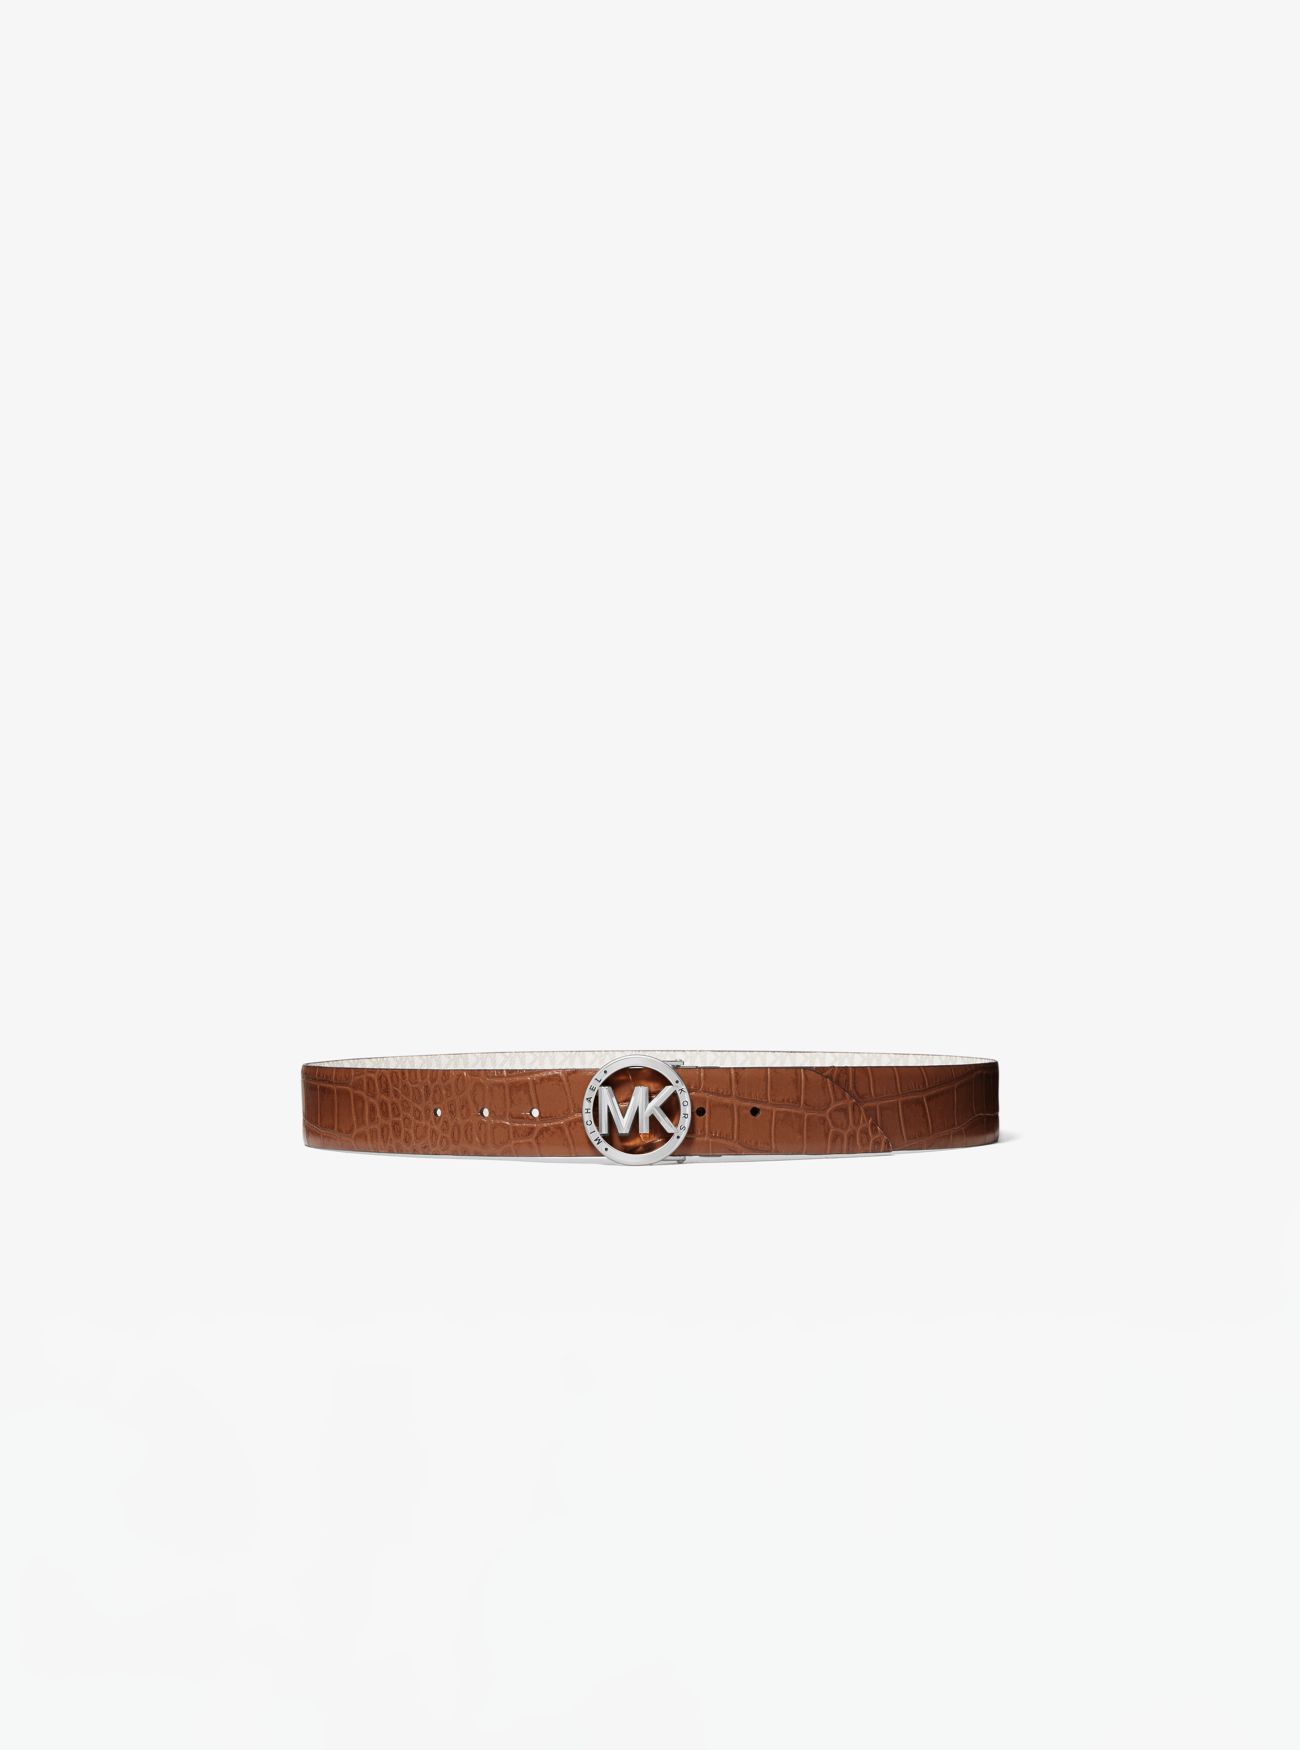 MK Reversible Logo and Crocodile Embossed Belt - Brown - Michael Kors